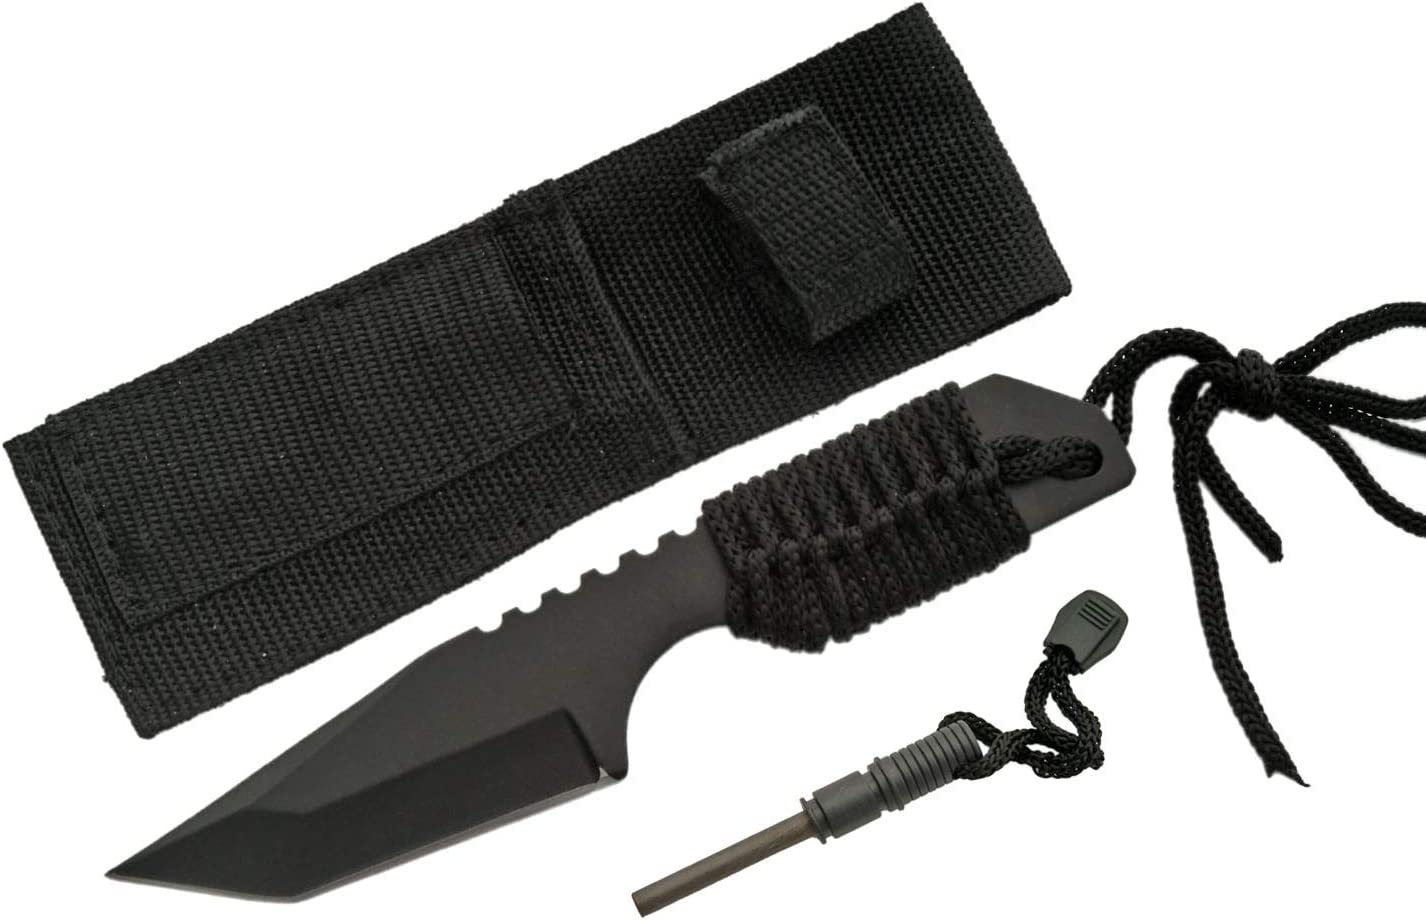 Szco Supplies Tanto Survivor Fire starter Knife, Black